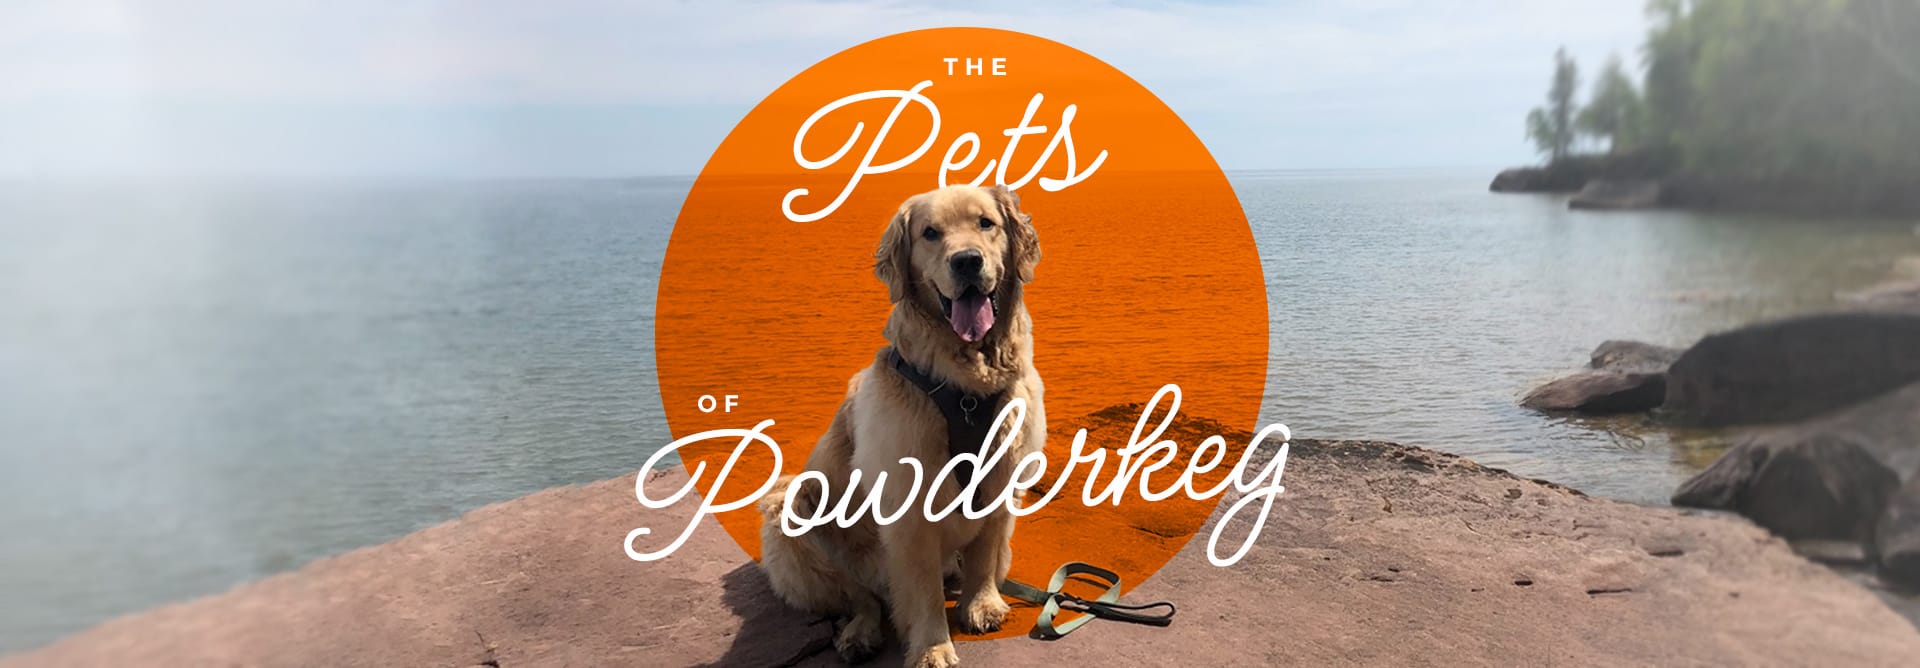 The Pets of Powderkeg